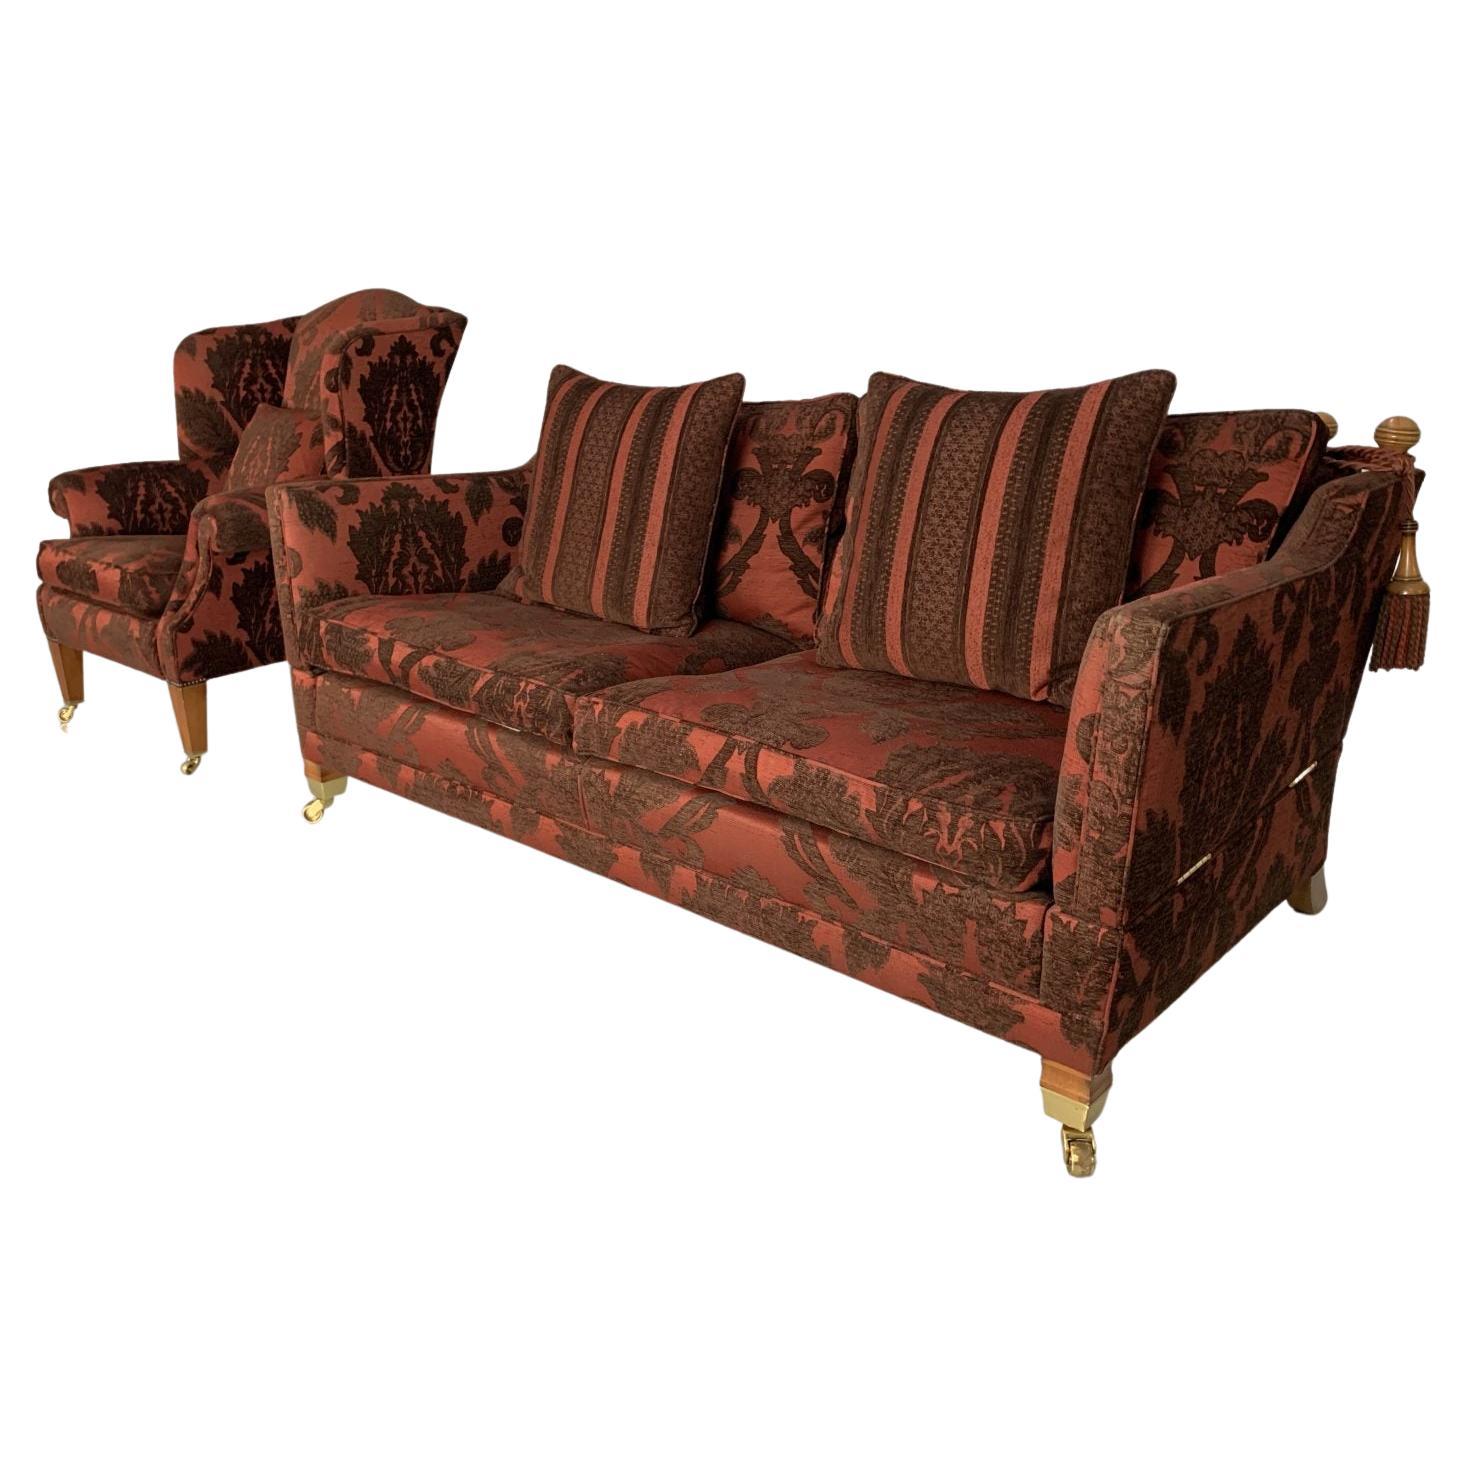 Duresta “Trafalgar” Sofa & “Devonshire” Armchair, in Deep Red Damask